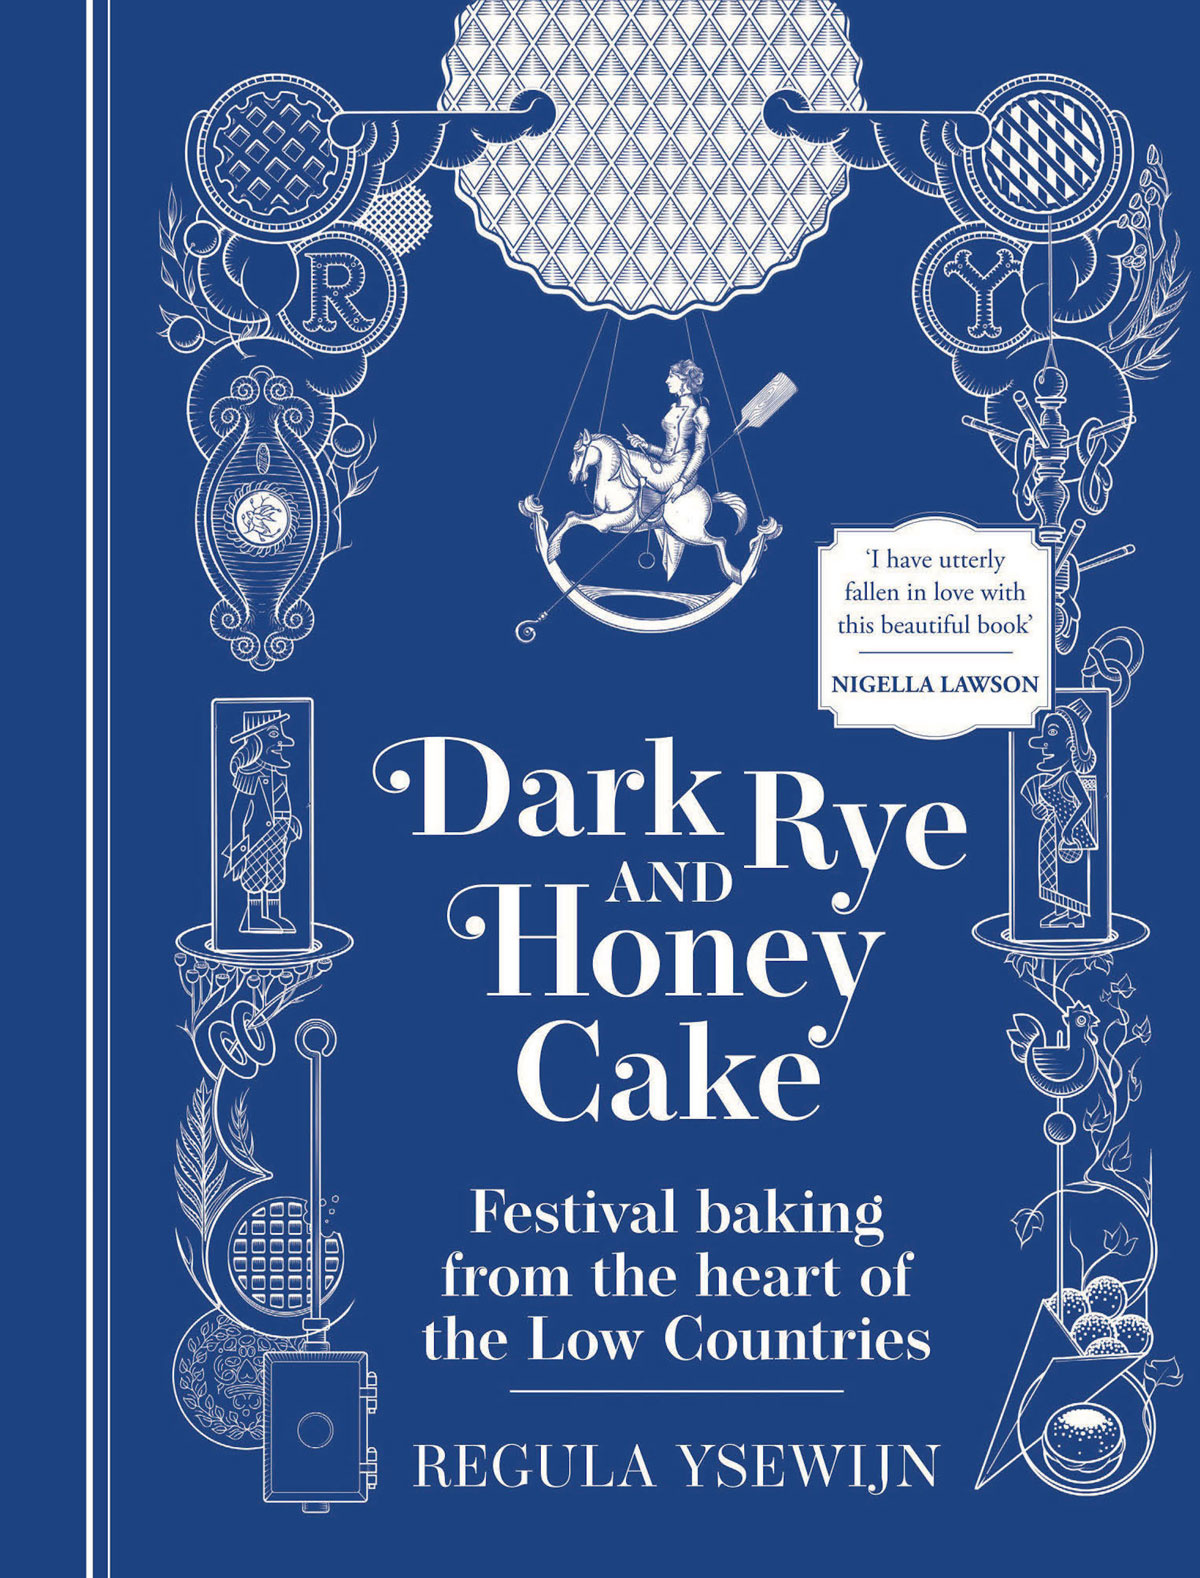 Book cover of Dark Rye and Honey Cake by Regula Ysewijn